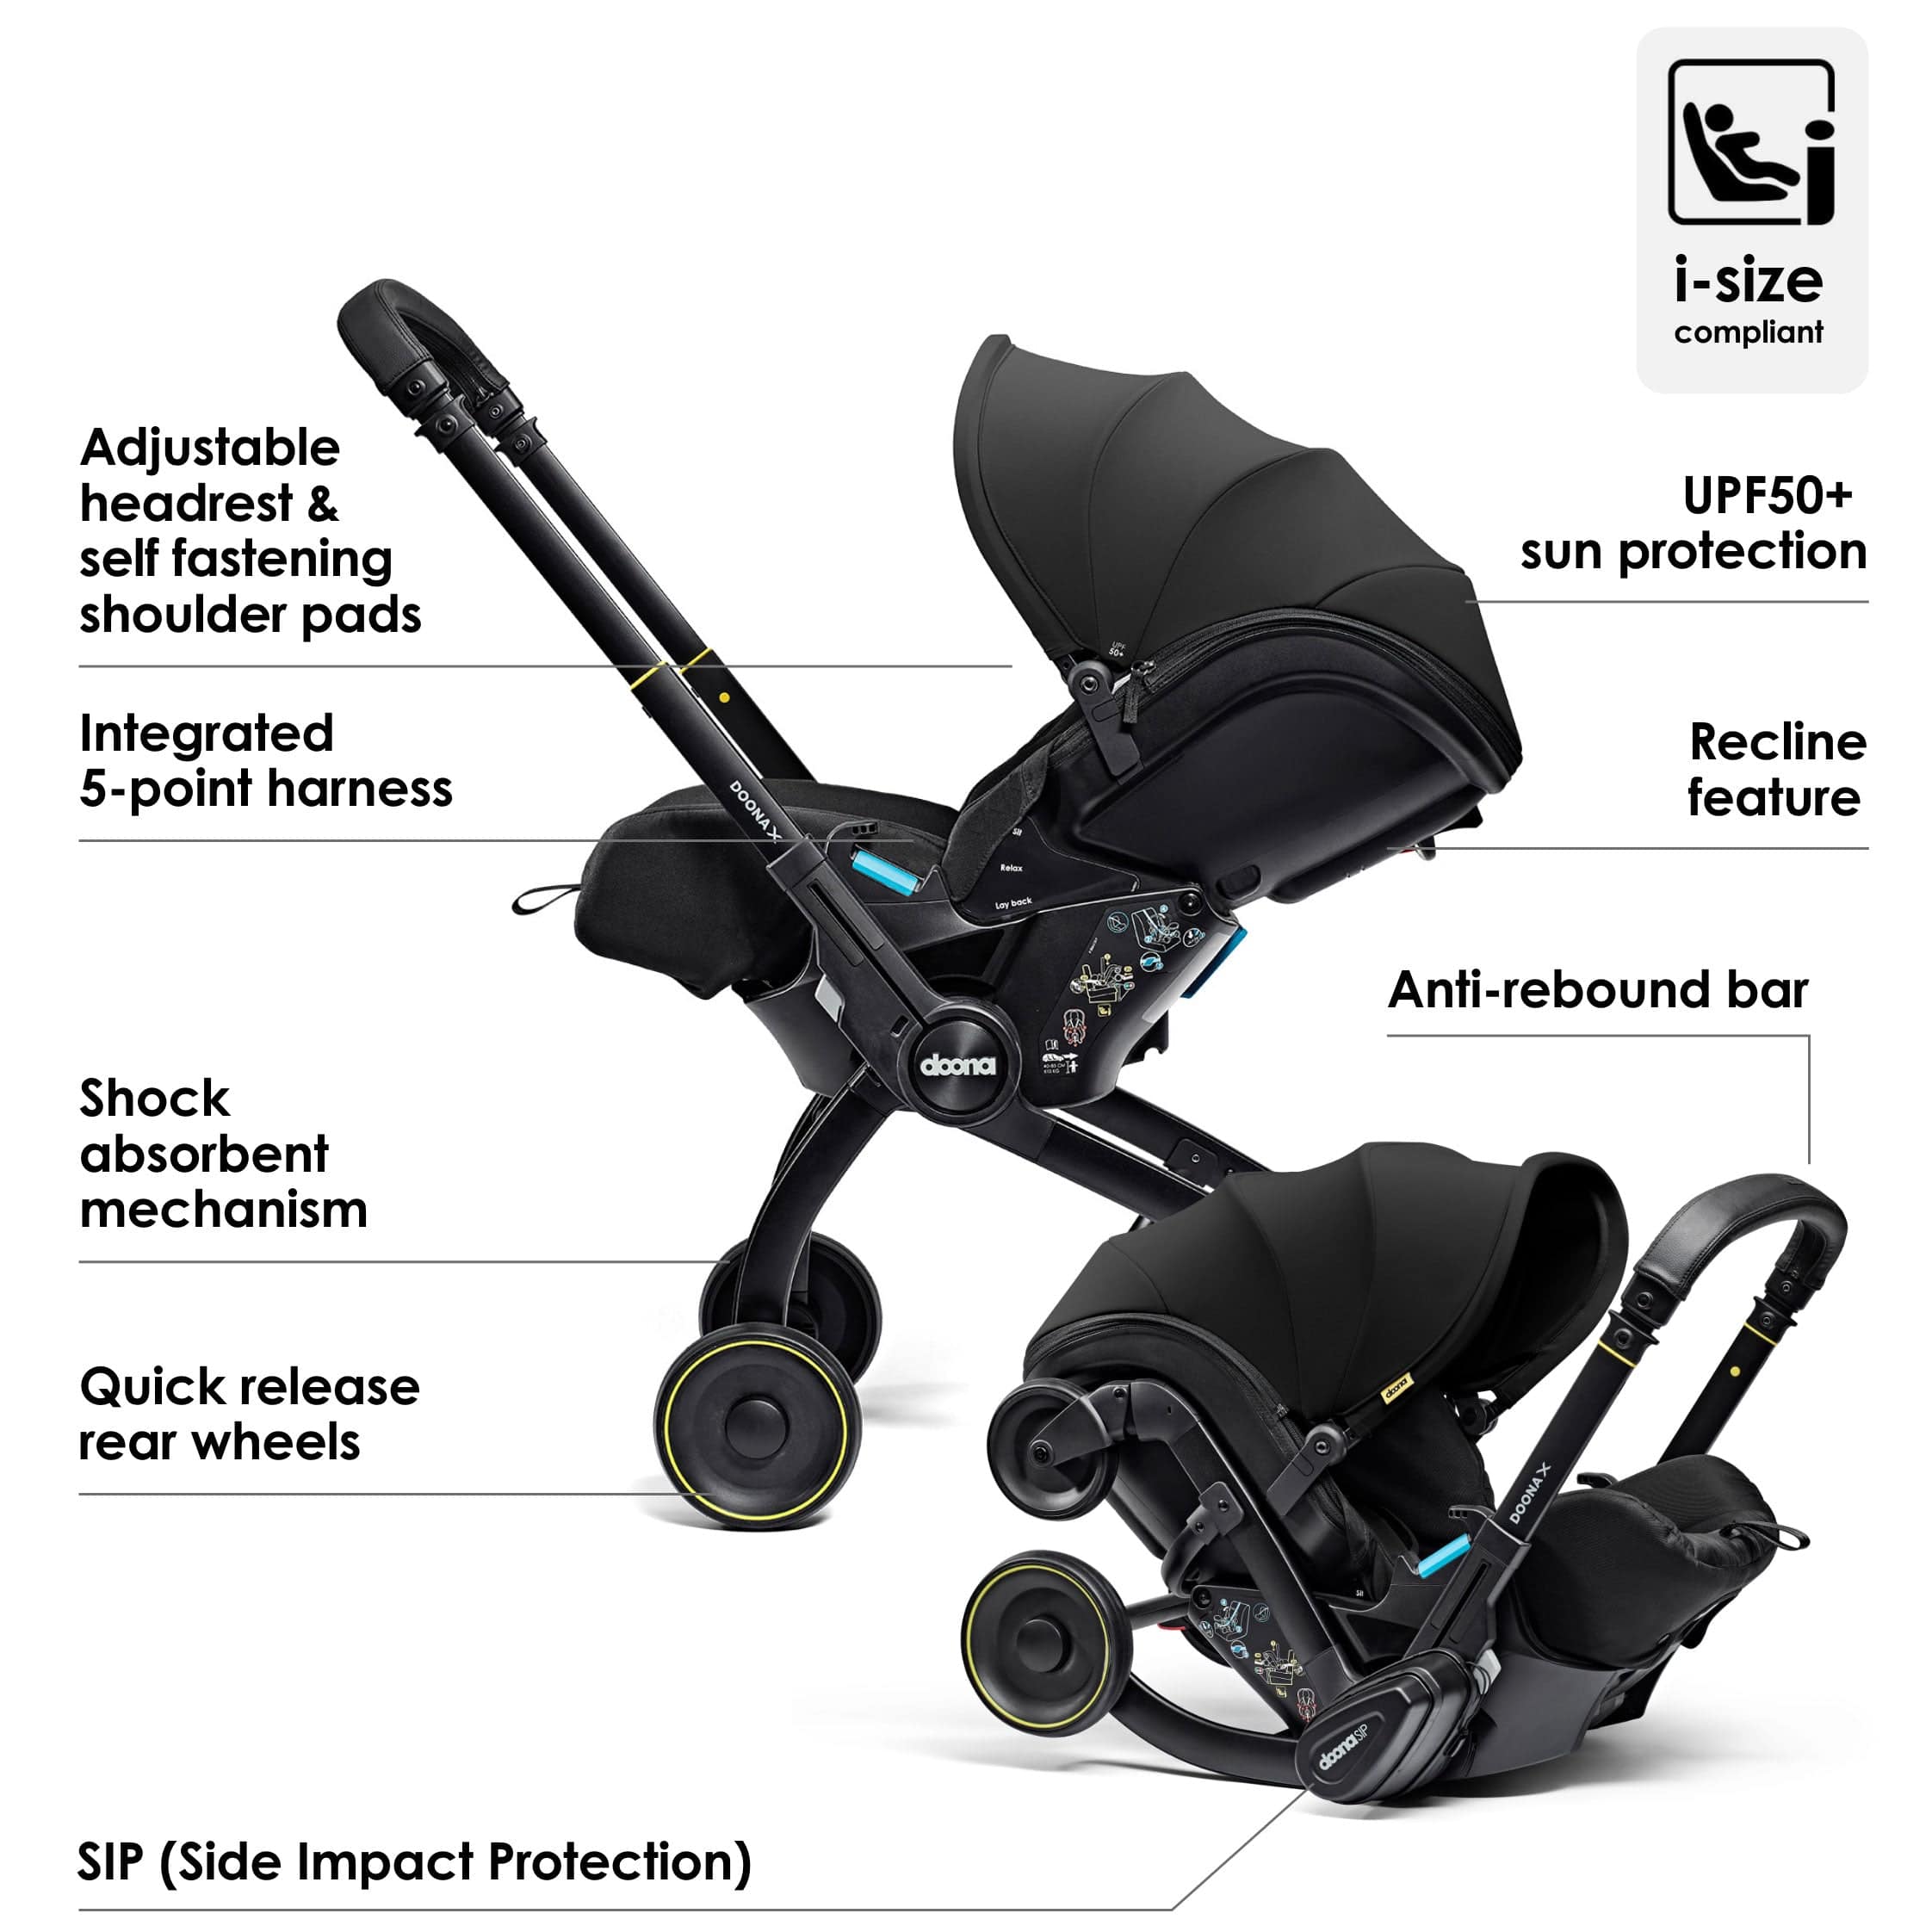 Doona baby car seats Doona X Infant Car Seat Stroller and X Isofix Base (Nitro Black)